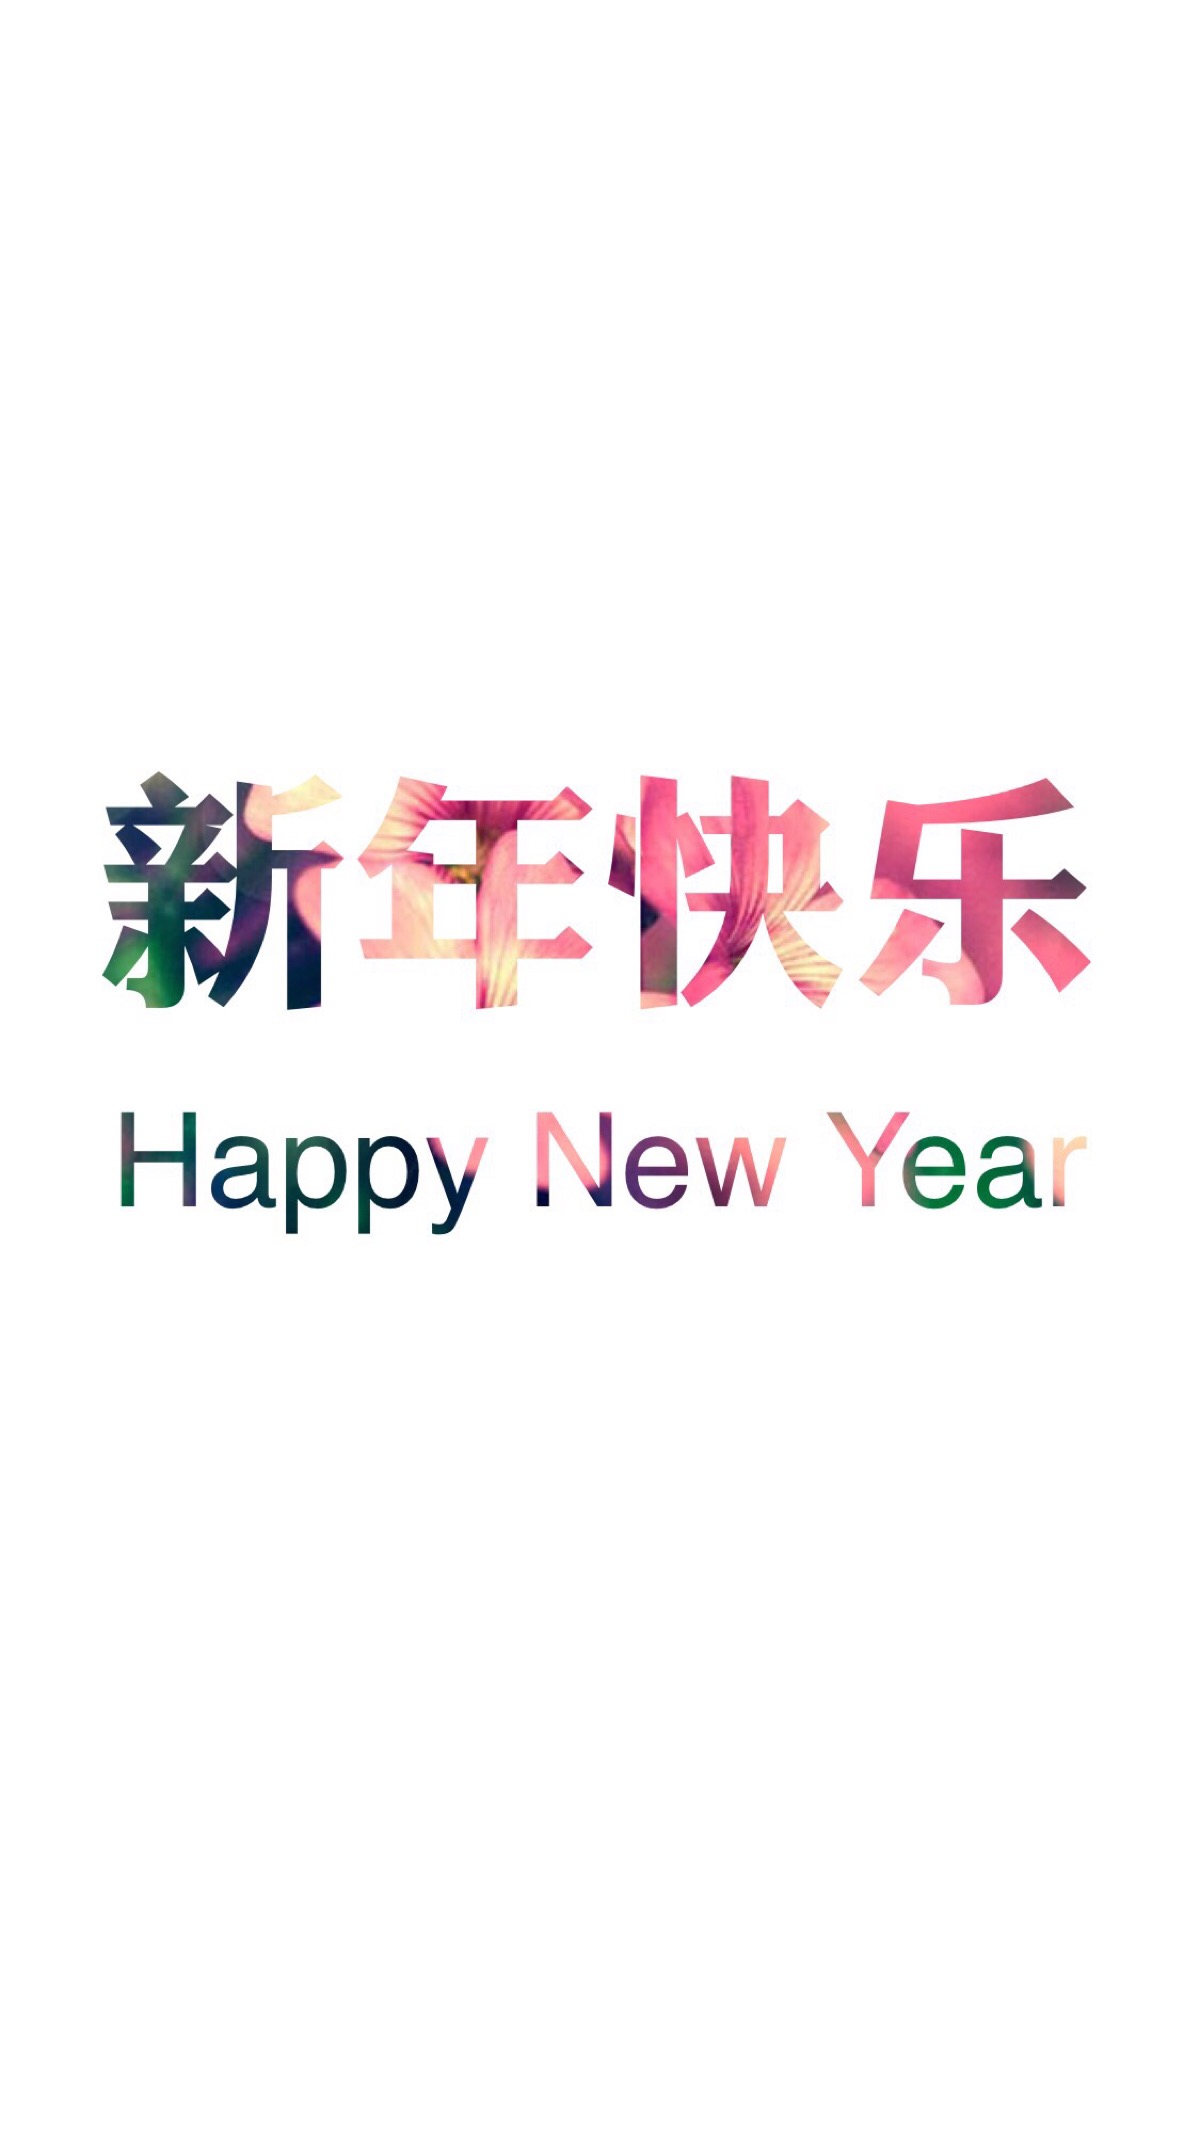 happy new year 新年快乐 新年壁纸 新年愿望 新年祝福 春节壁纸 素材